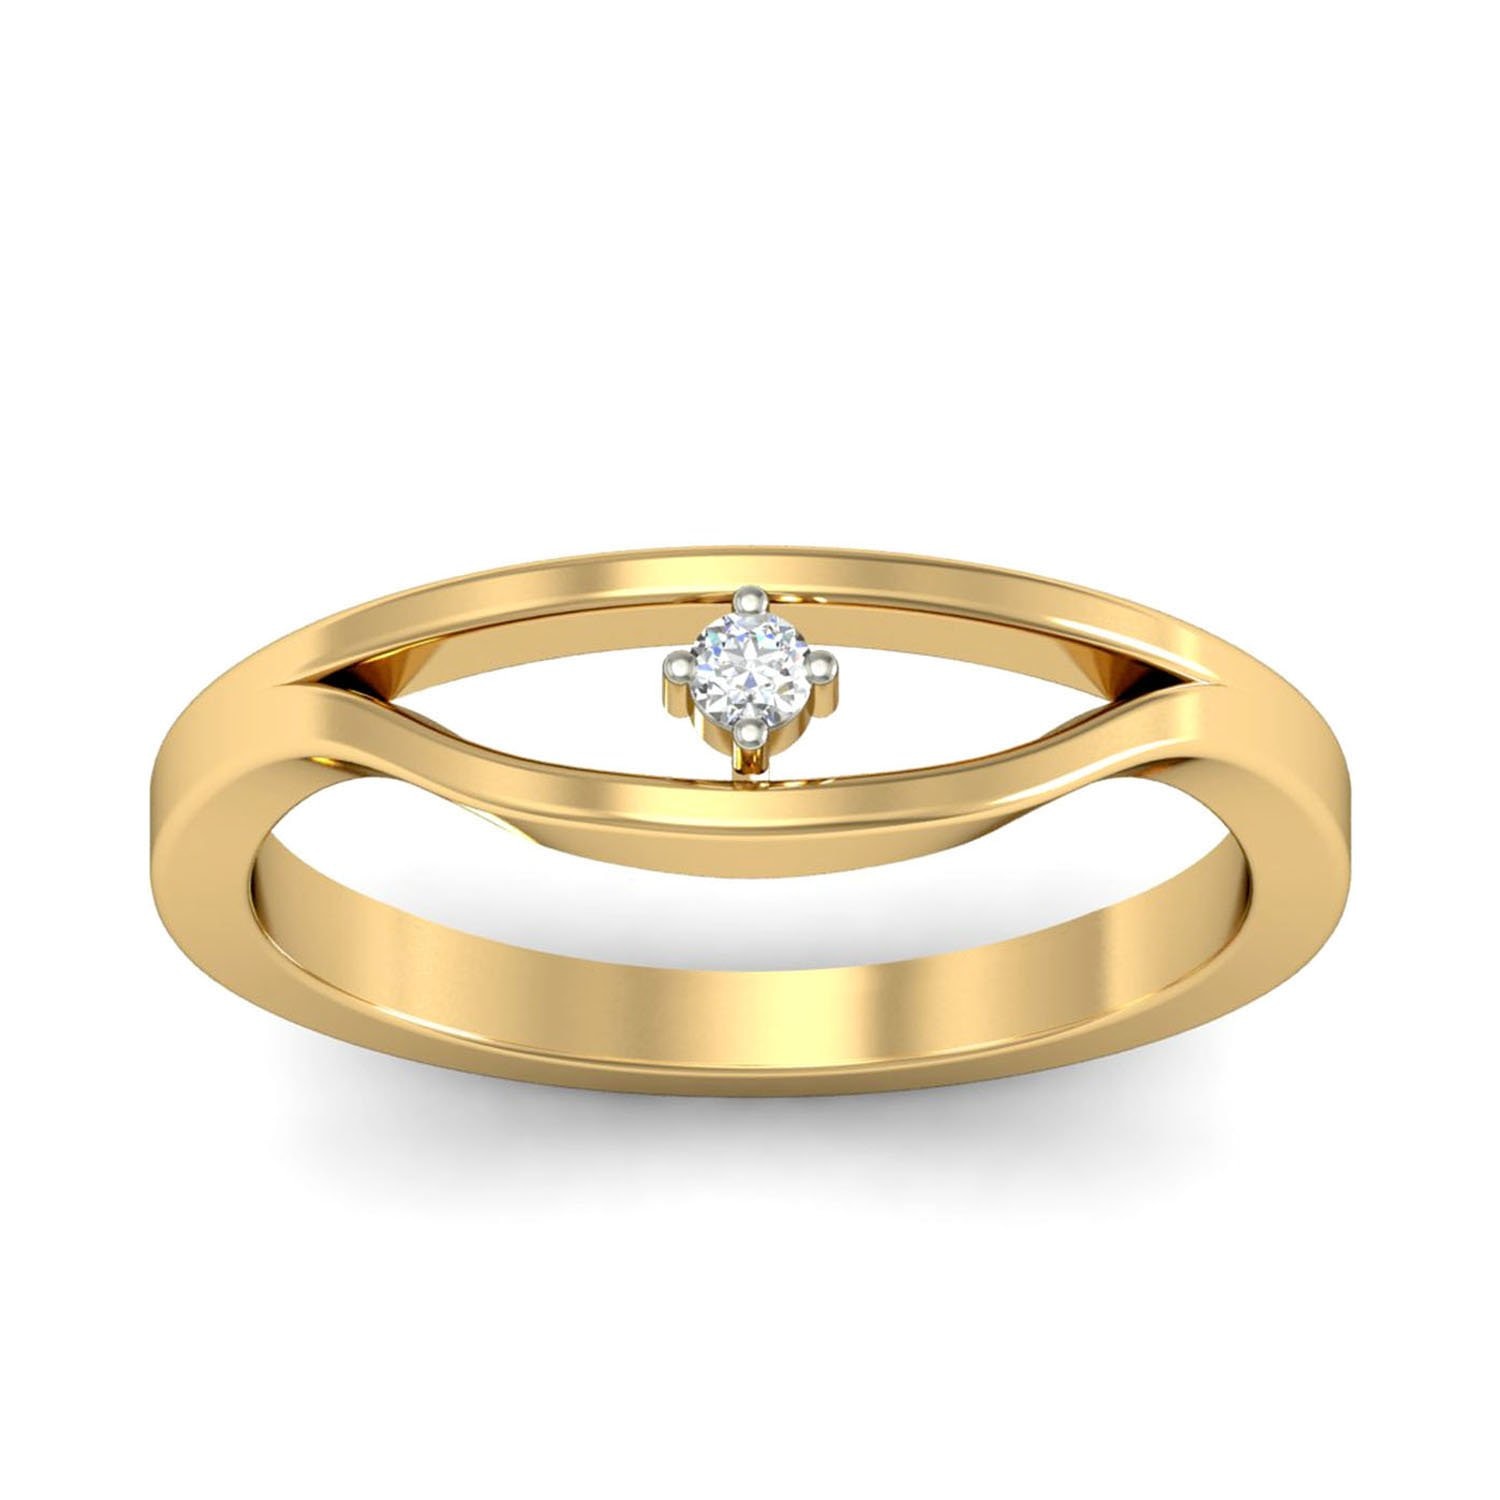 Stingray Earring With Diamonds 18-kt yellow gold | bespoke fine jewelry